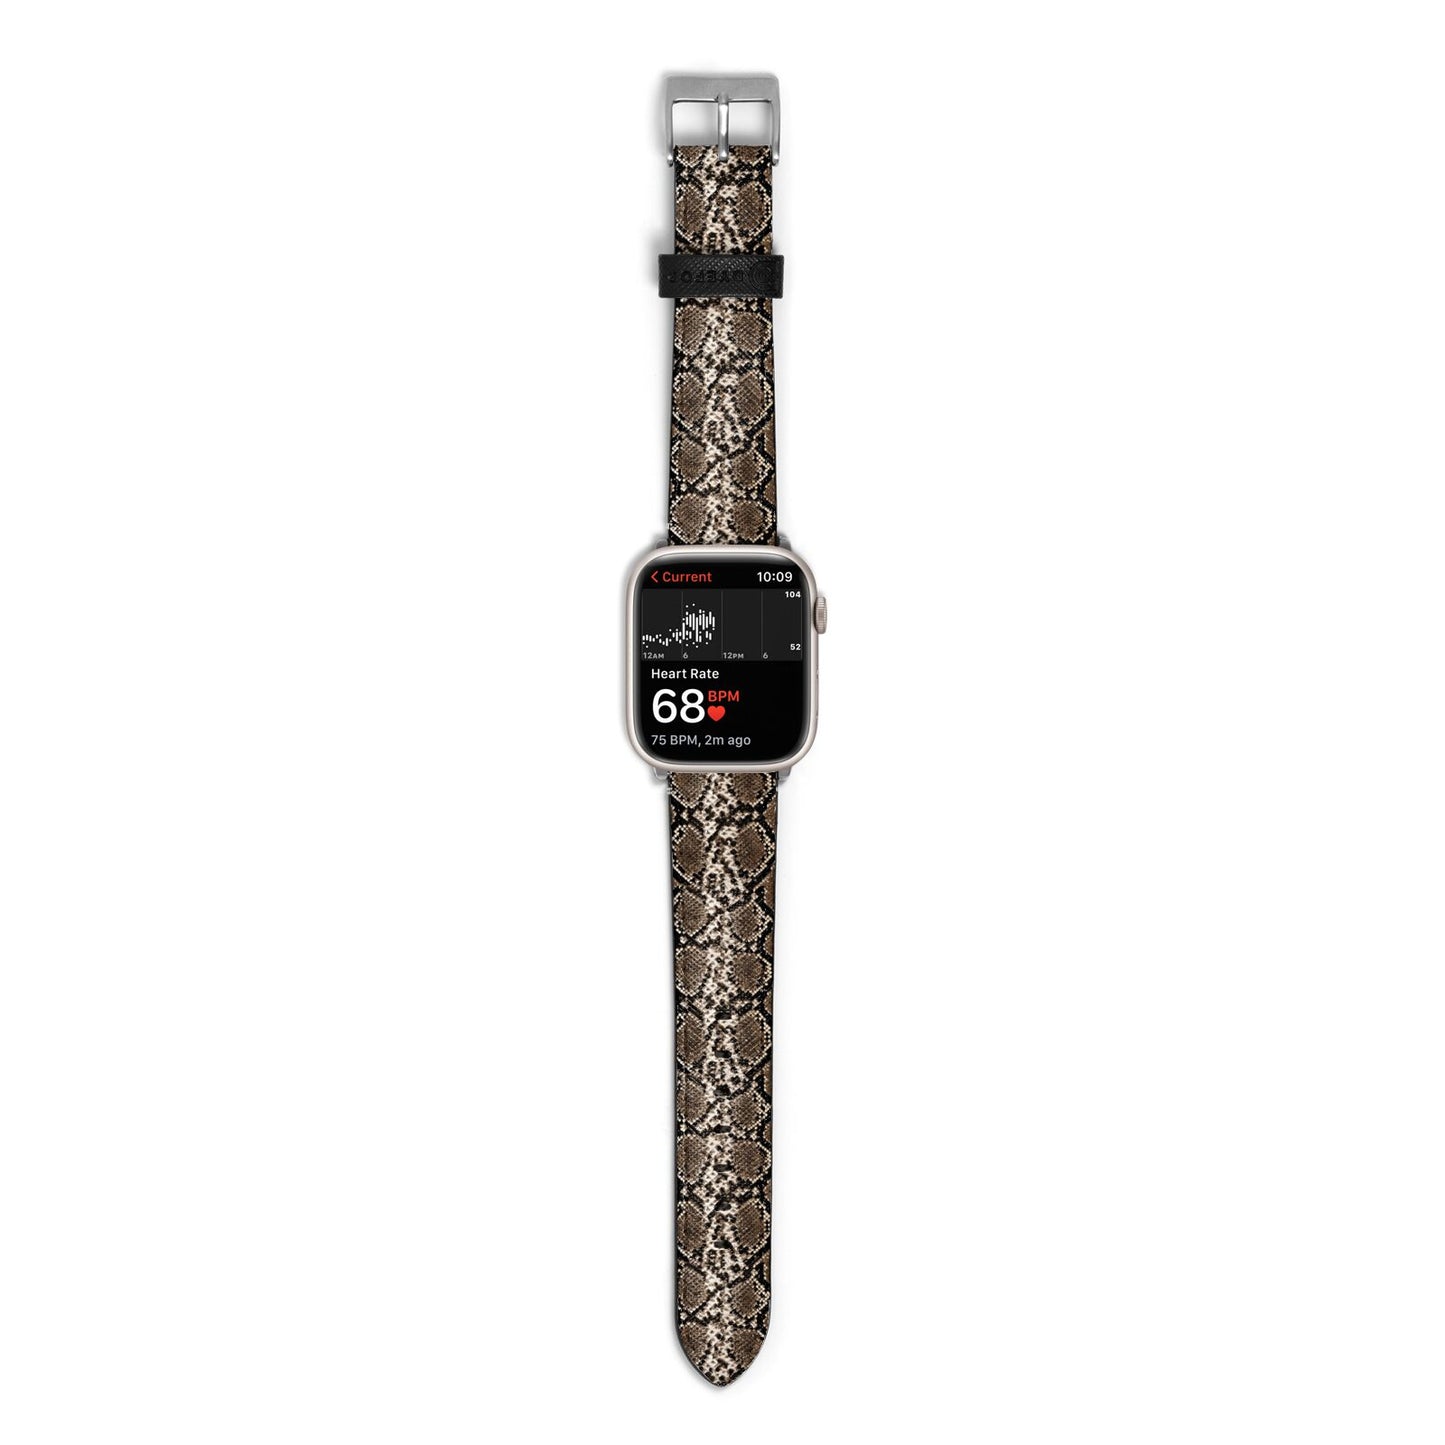 Snakeskin Pattern Apple Watch Strap Size 38mm with Silver Hardware